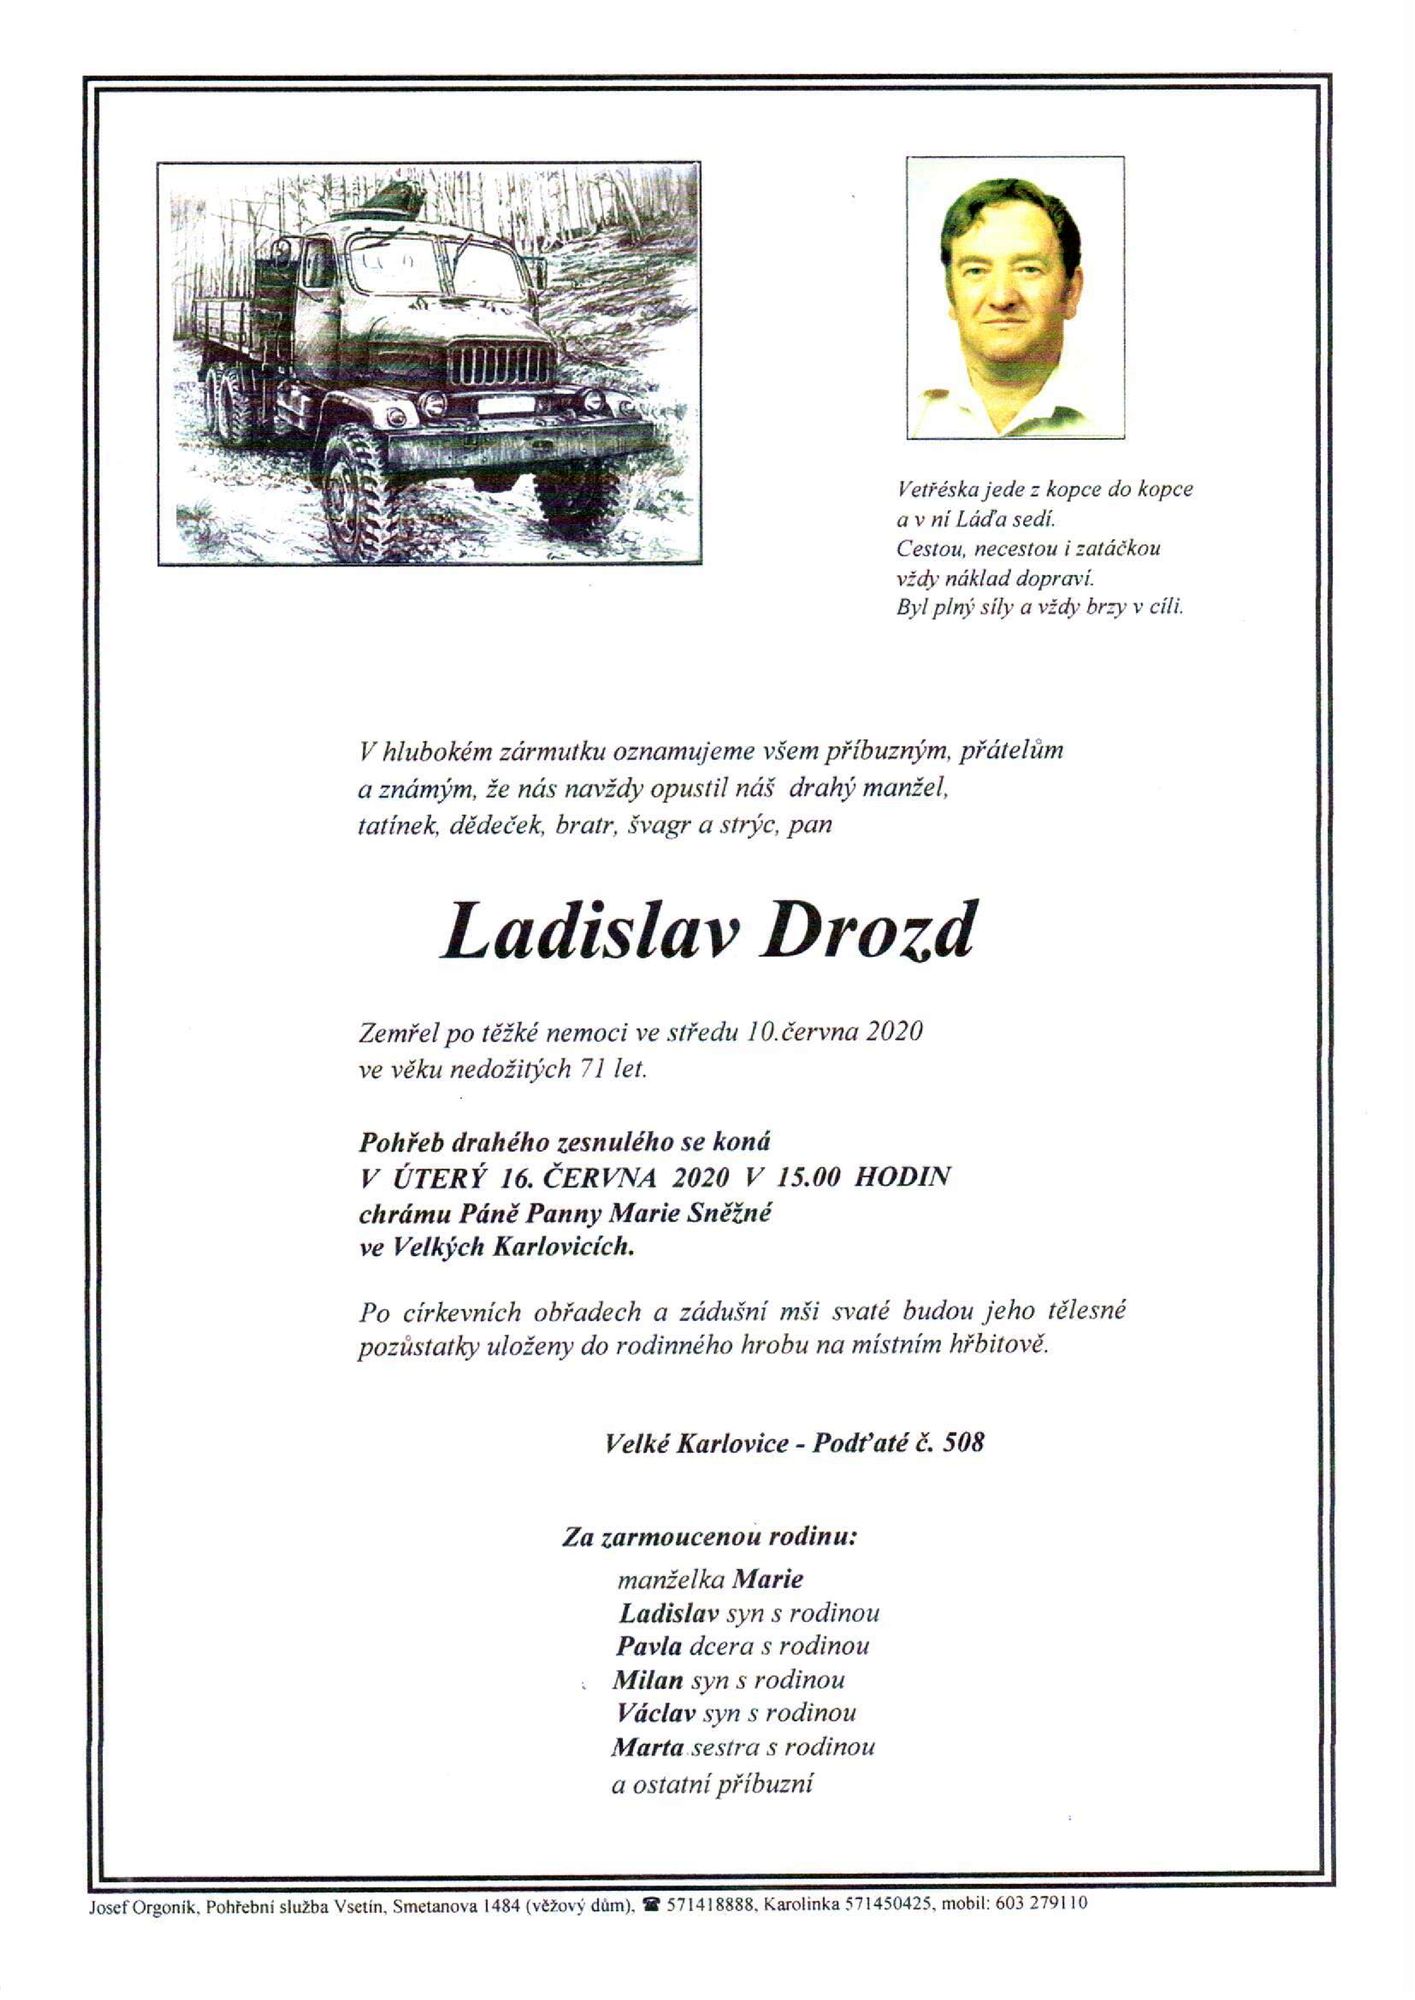 Ladislav Drozd